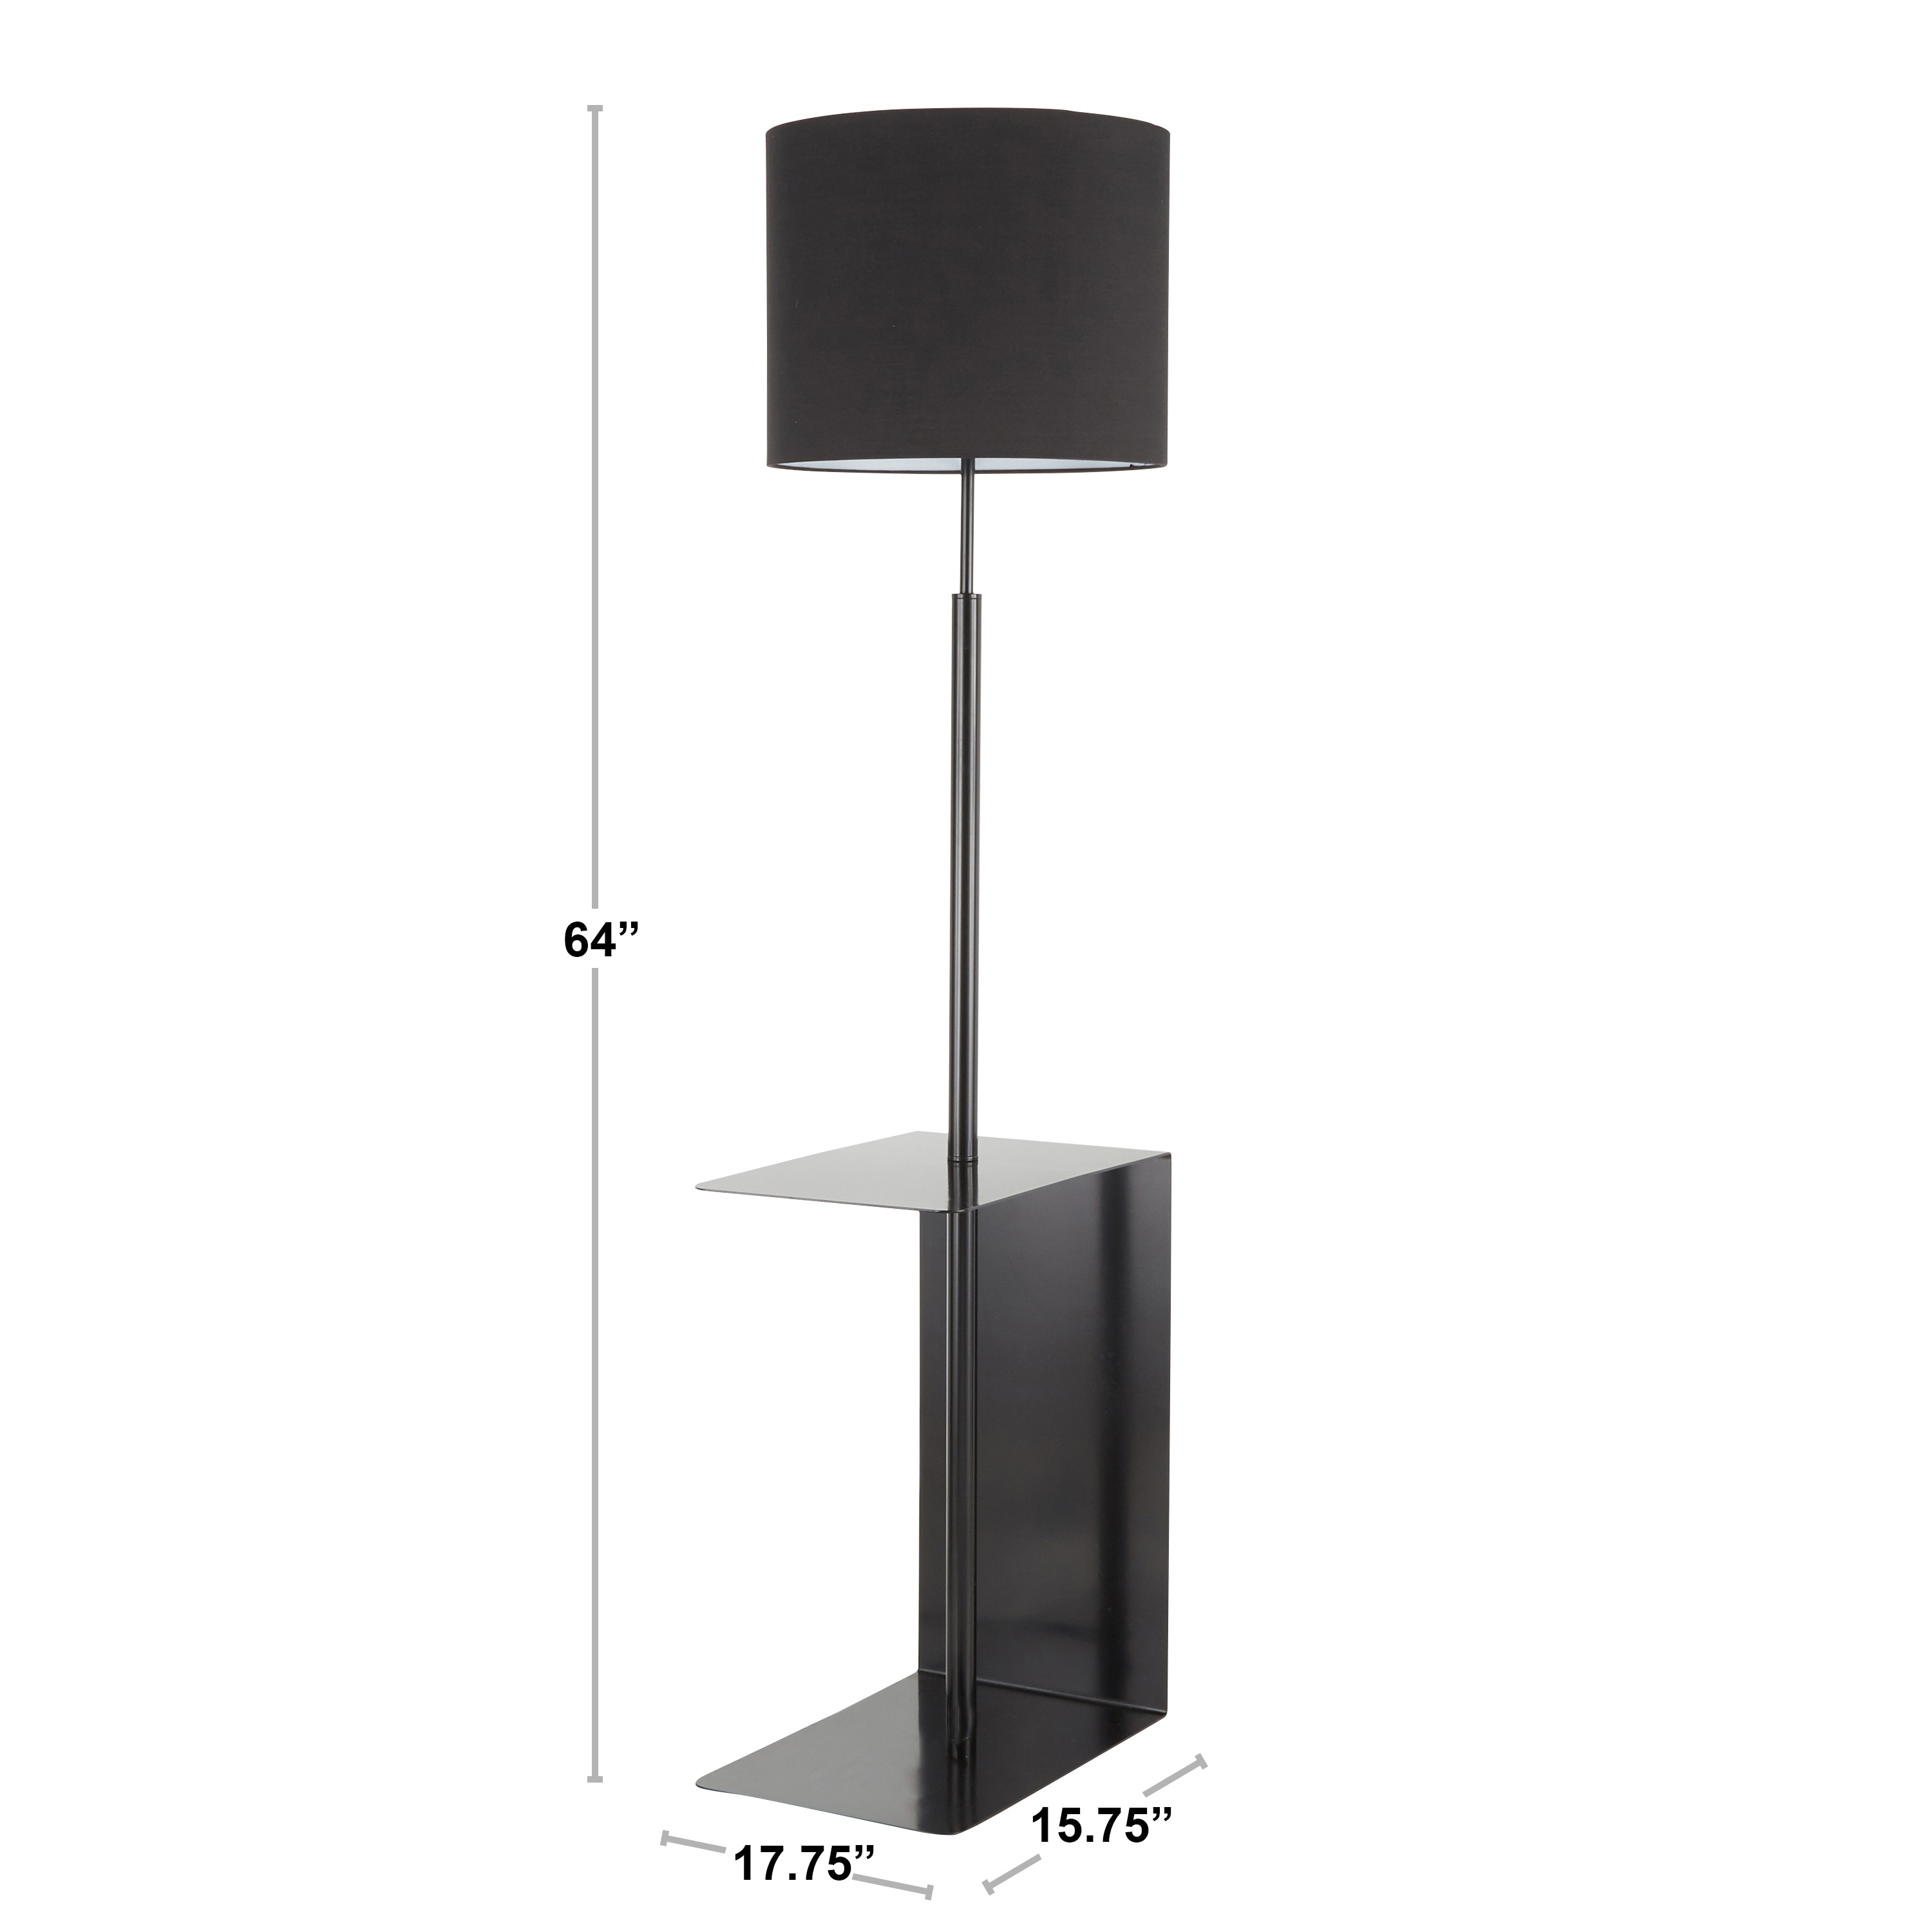 Featured image of post Metal Floor Lamp With Table : Sleek minimalist metal floor lamp.